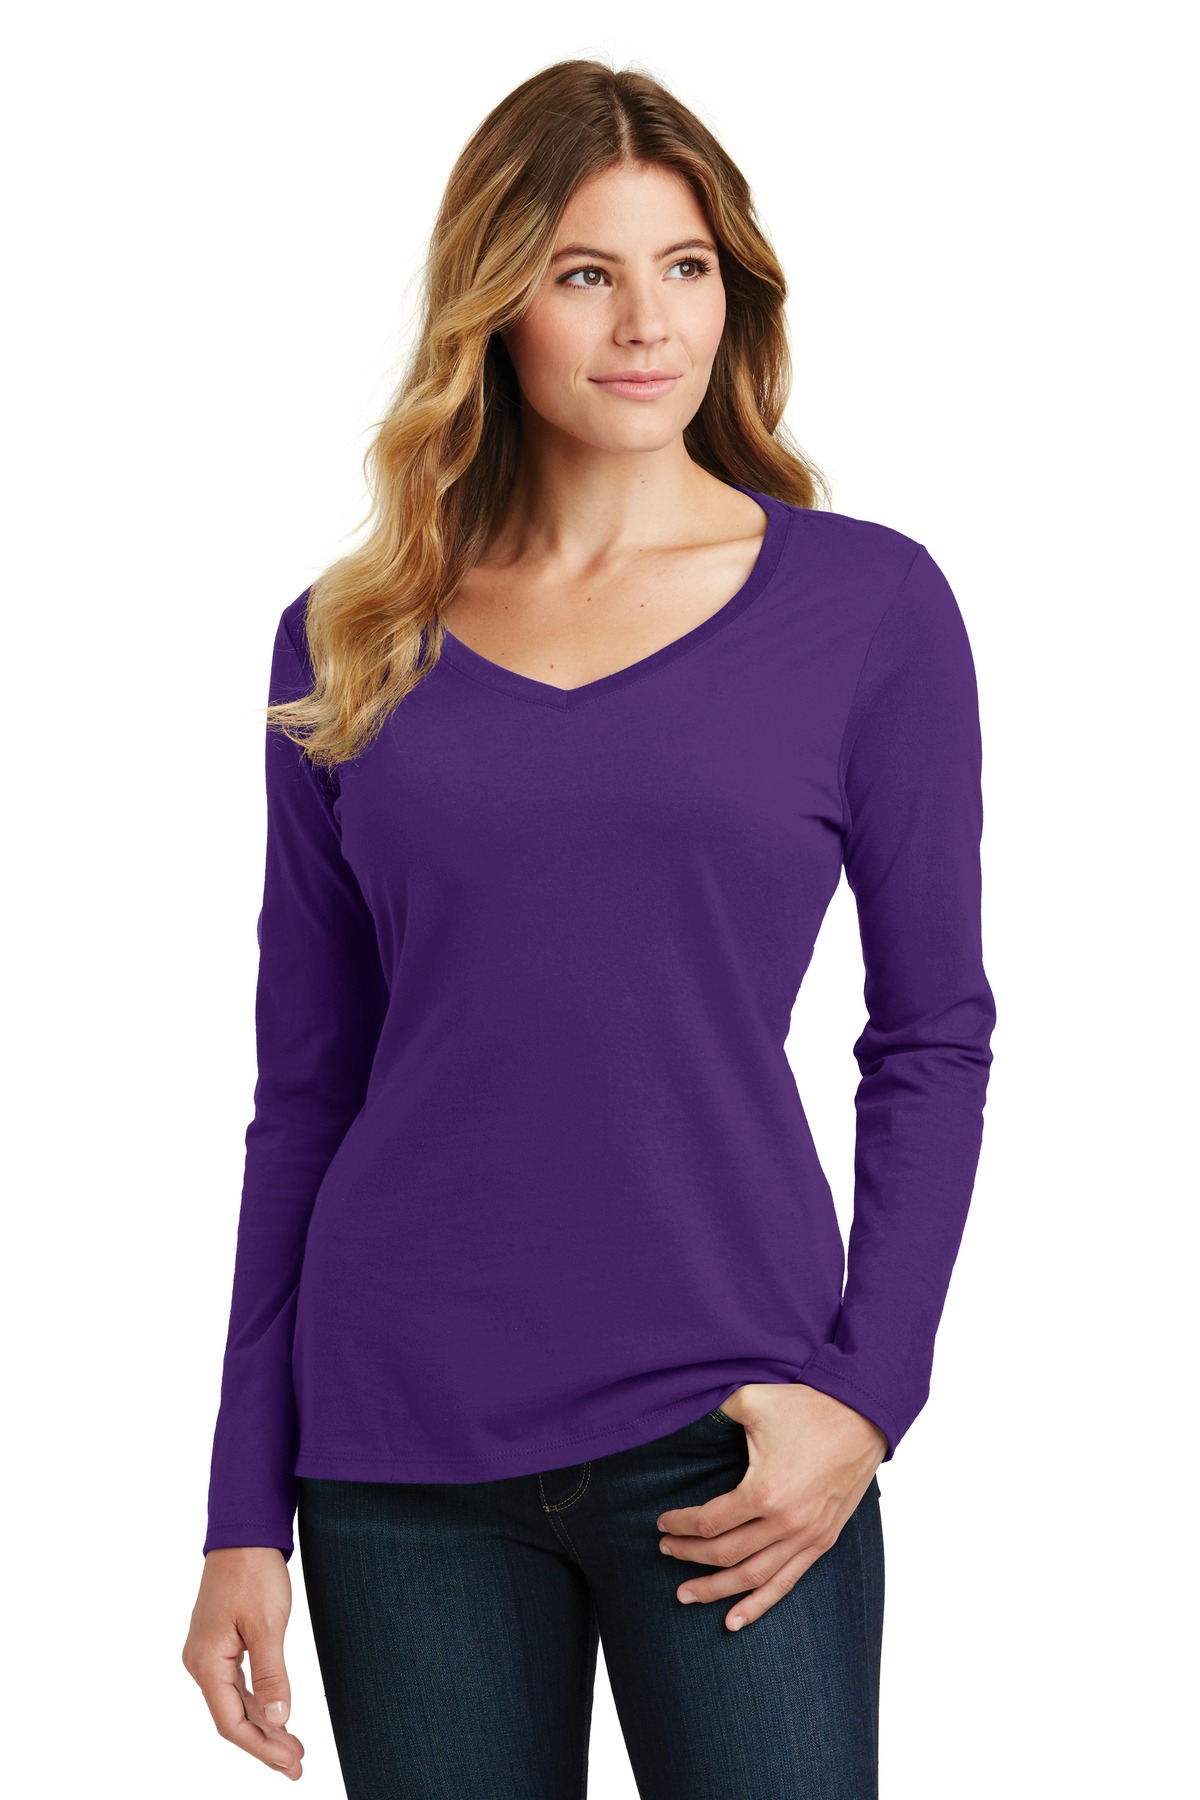 Port & Company Ladies Long Sleeve Fan Favorite V Neck Tee-4XL (Team Purple) - image 1 of 6